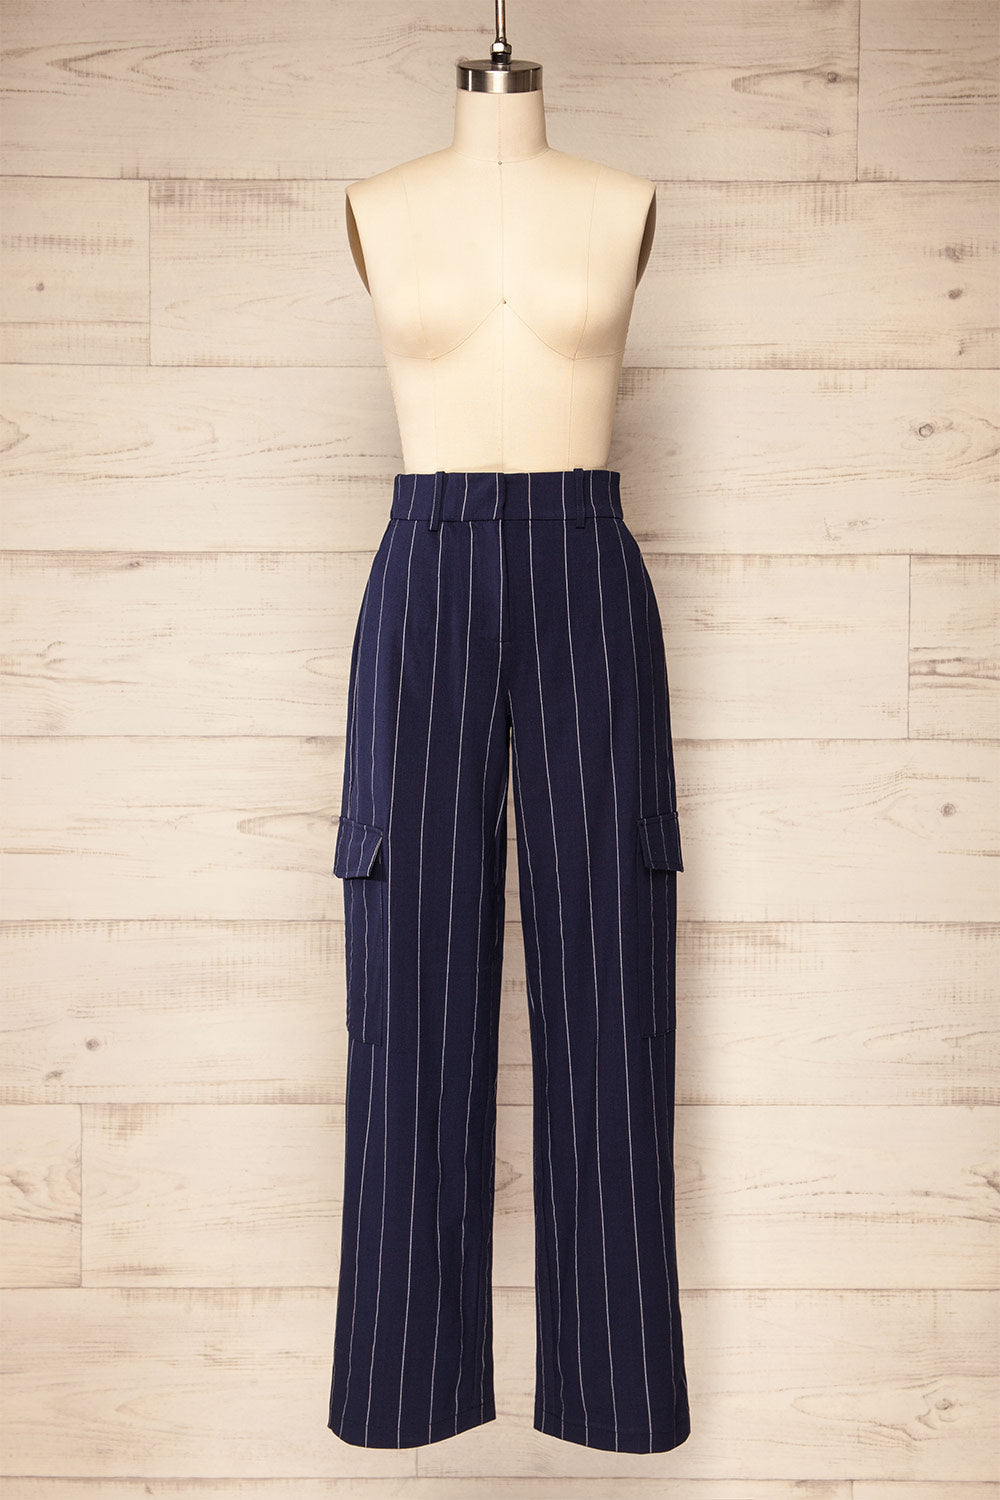 Ashwell Navy Blue Striped Cargo Pants | La petite garçonne front view